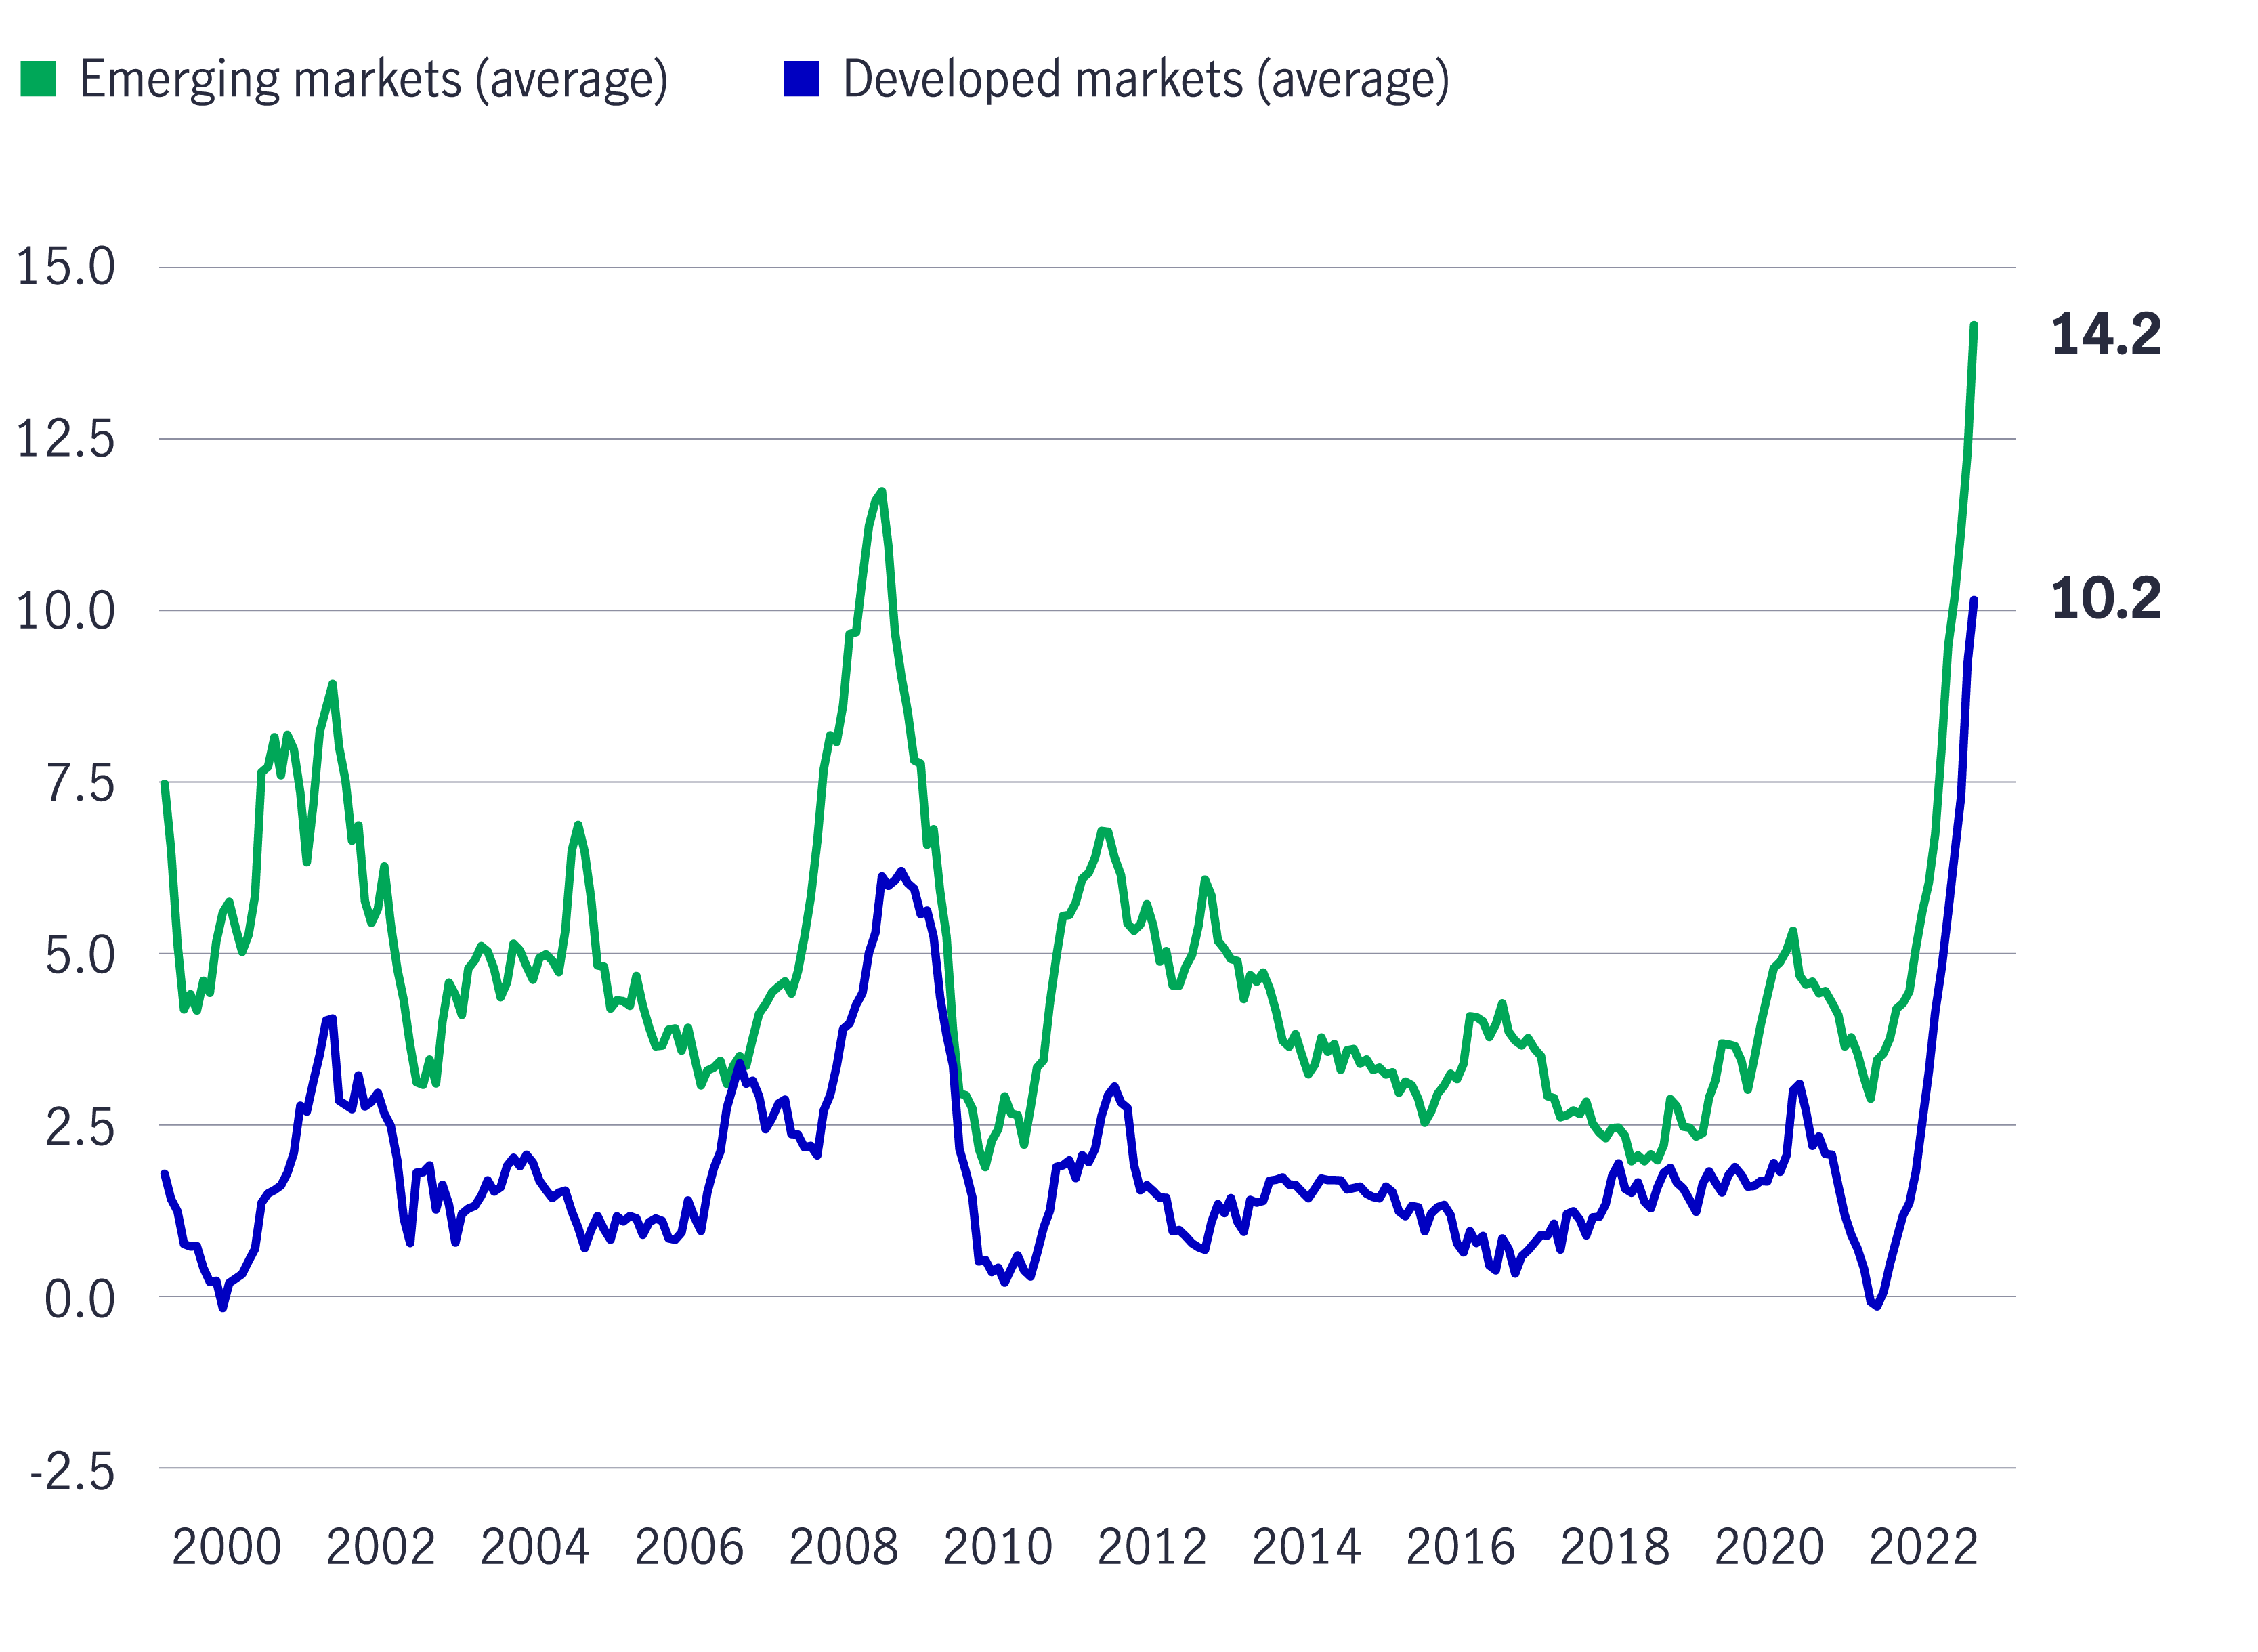 CPI food inflation, Emerging Markets VS Developed Markets